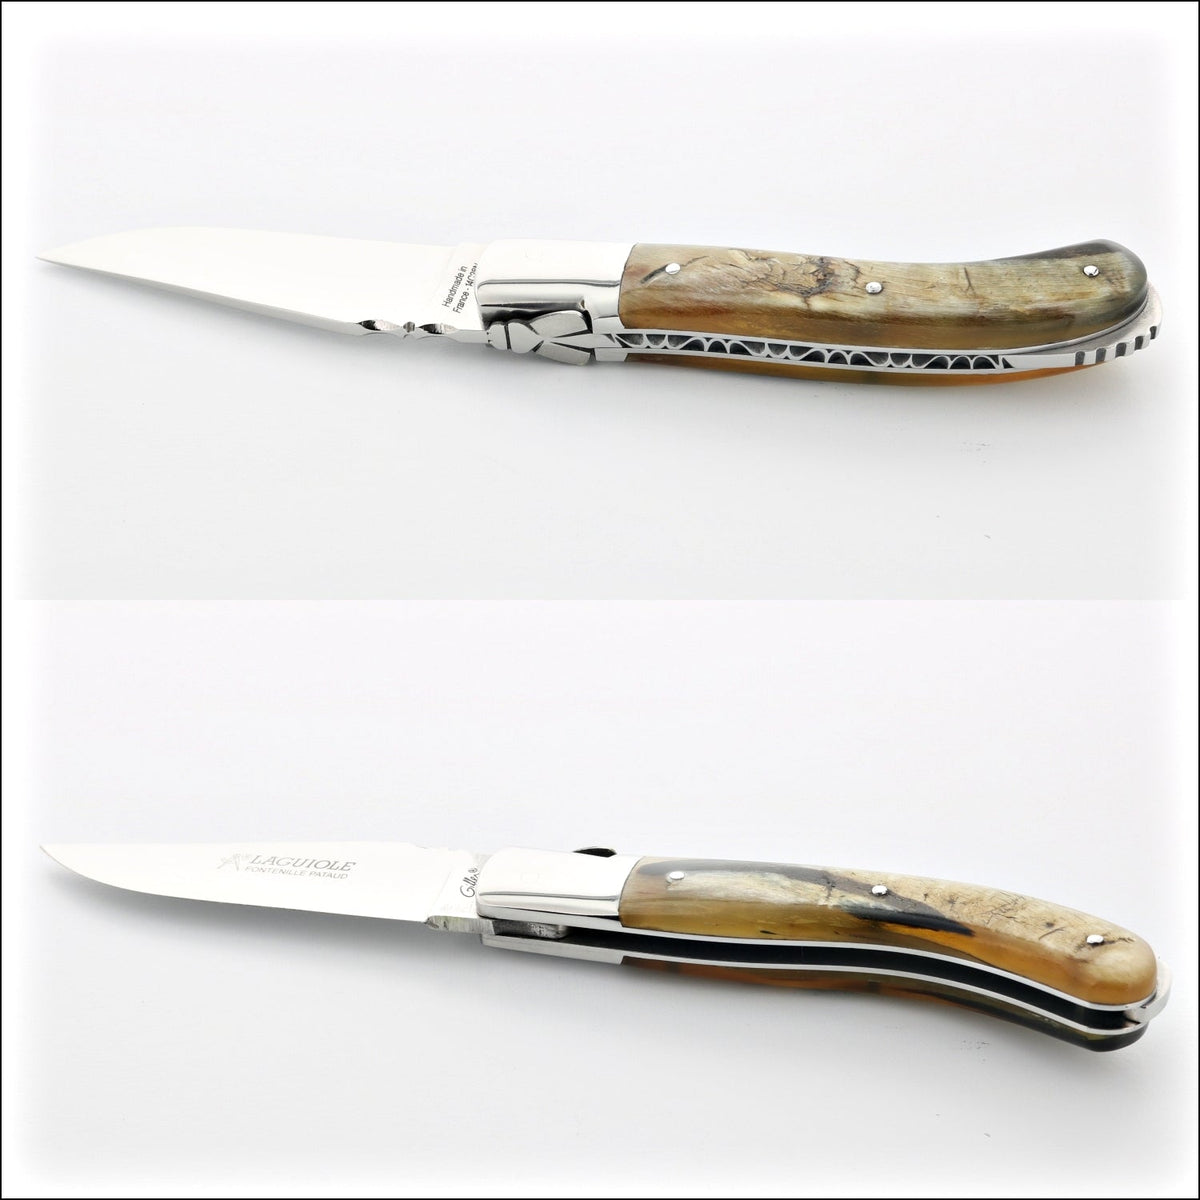 Laguiole Sport Classic Folding Knife Ram Horn